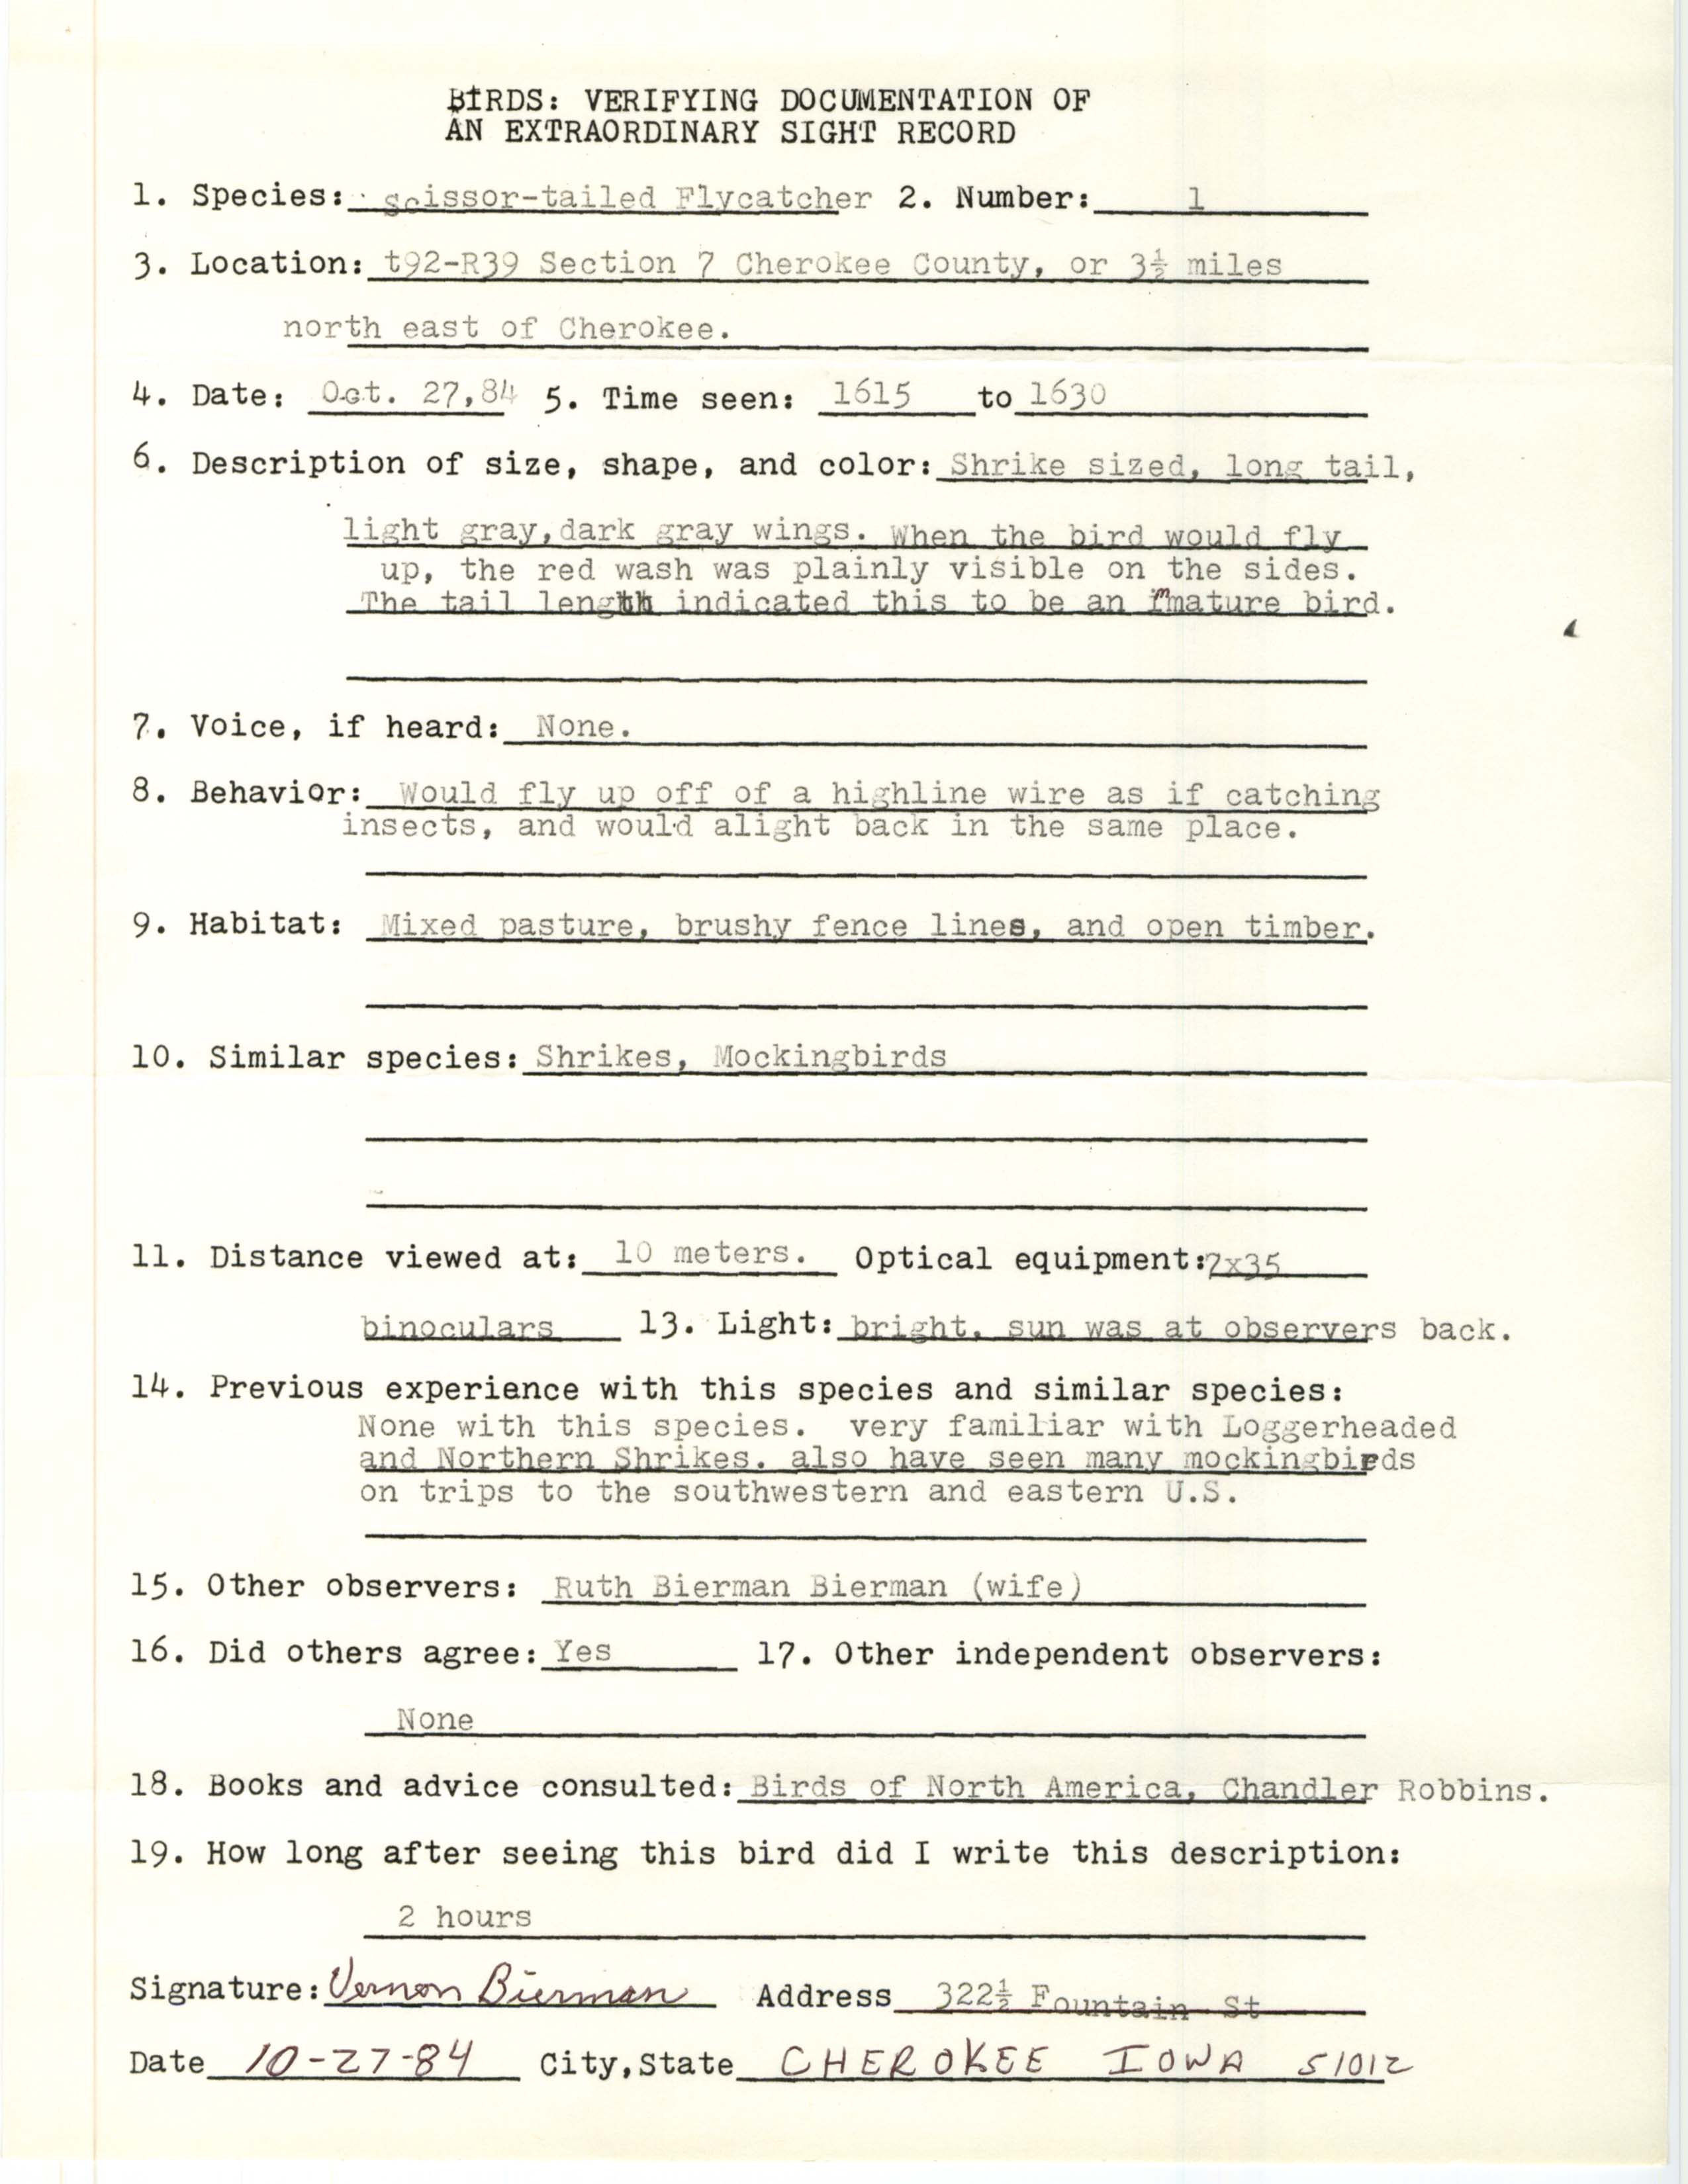 Rare bird documentation form for Scissor-tailed Flycatcher northeast of Cherokee, 1984